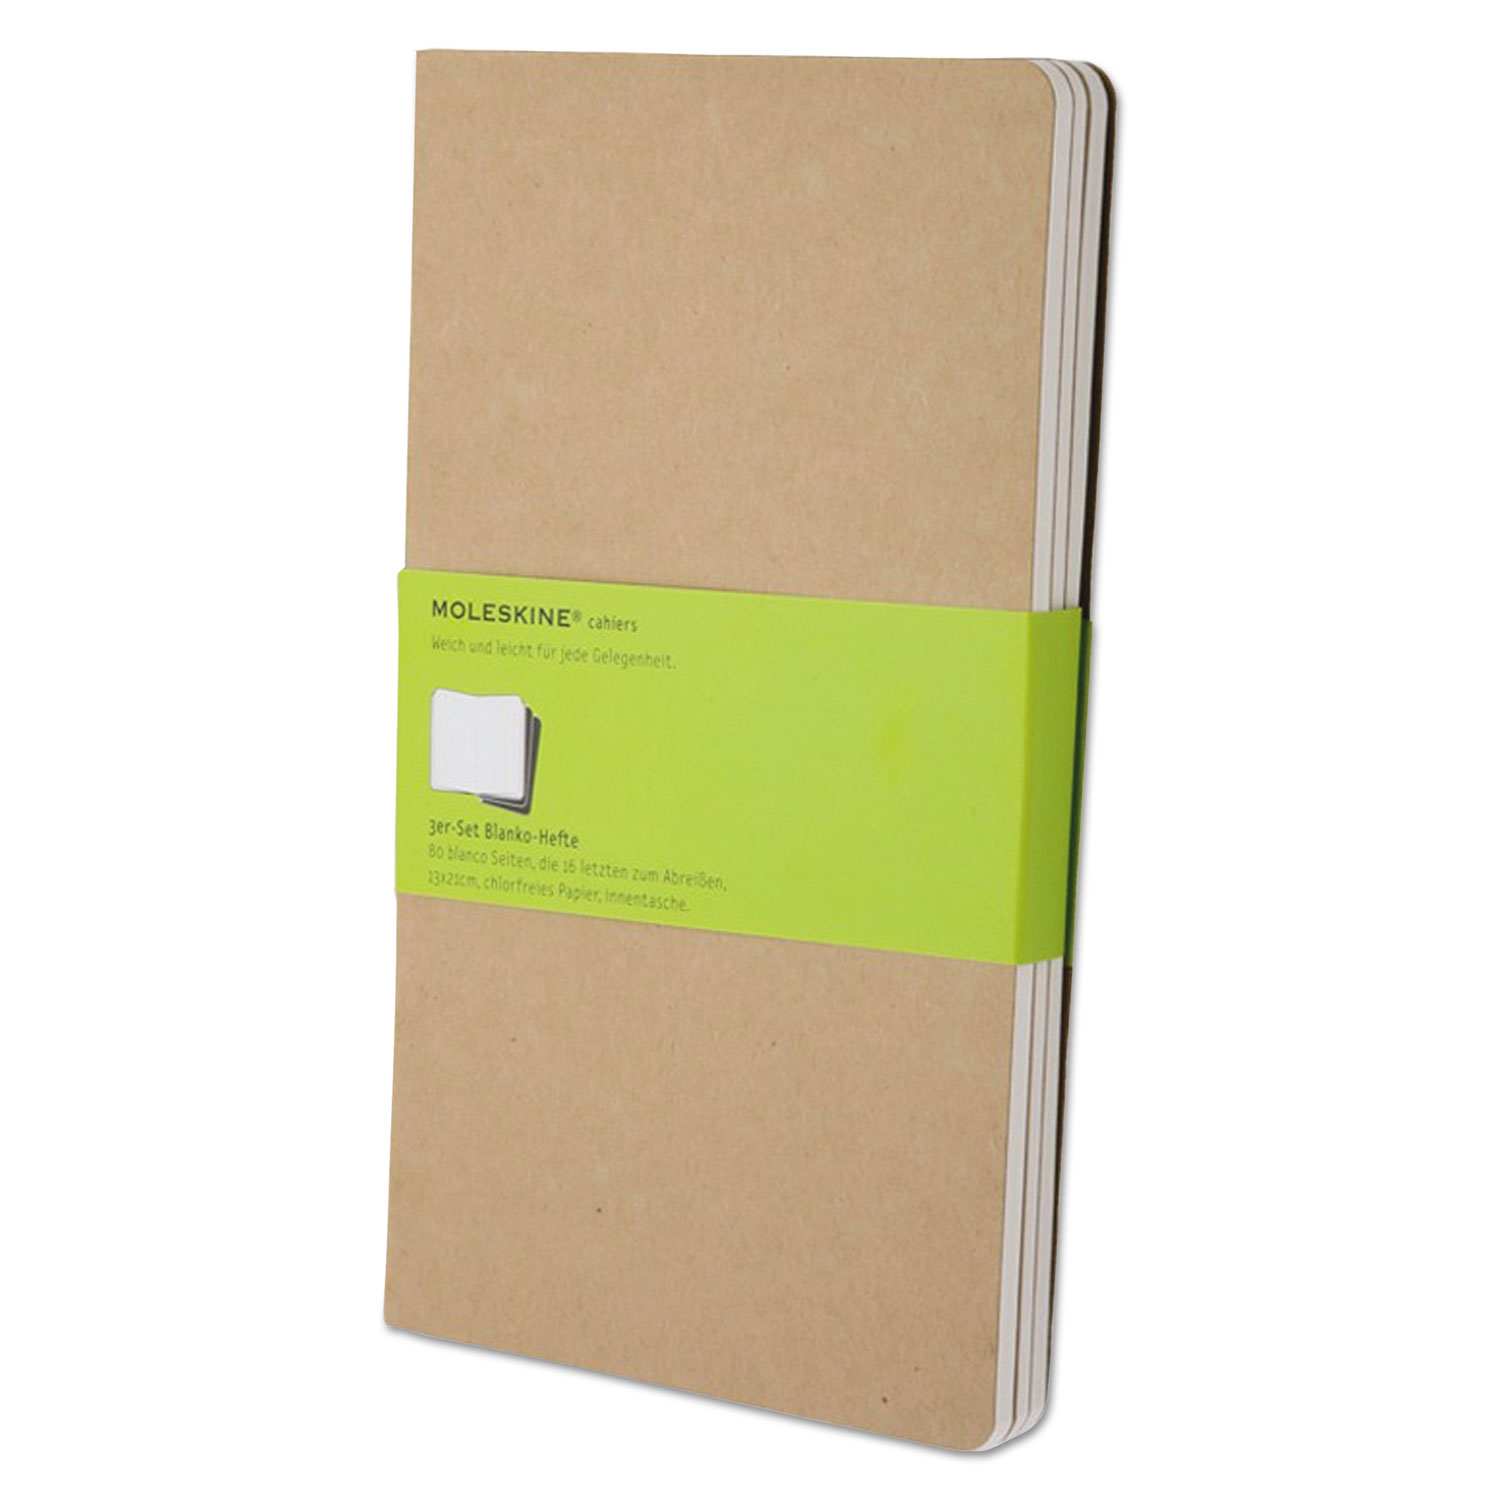  Moleskine QP418 Cahier Journal, Unruled, Kraft Brown Cover, 8.25 x 5, 80 Sheets, 3/Pack (HBGQP418) 